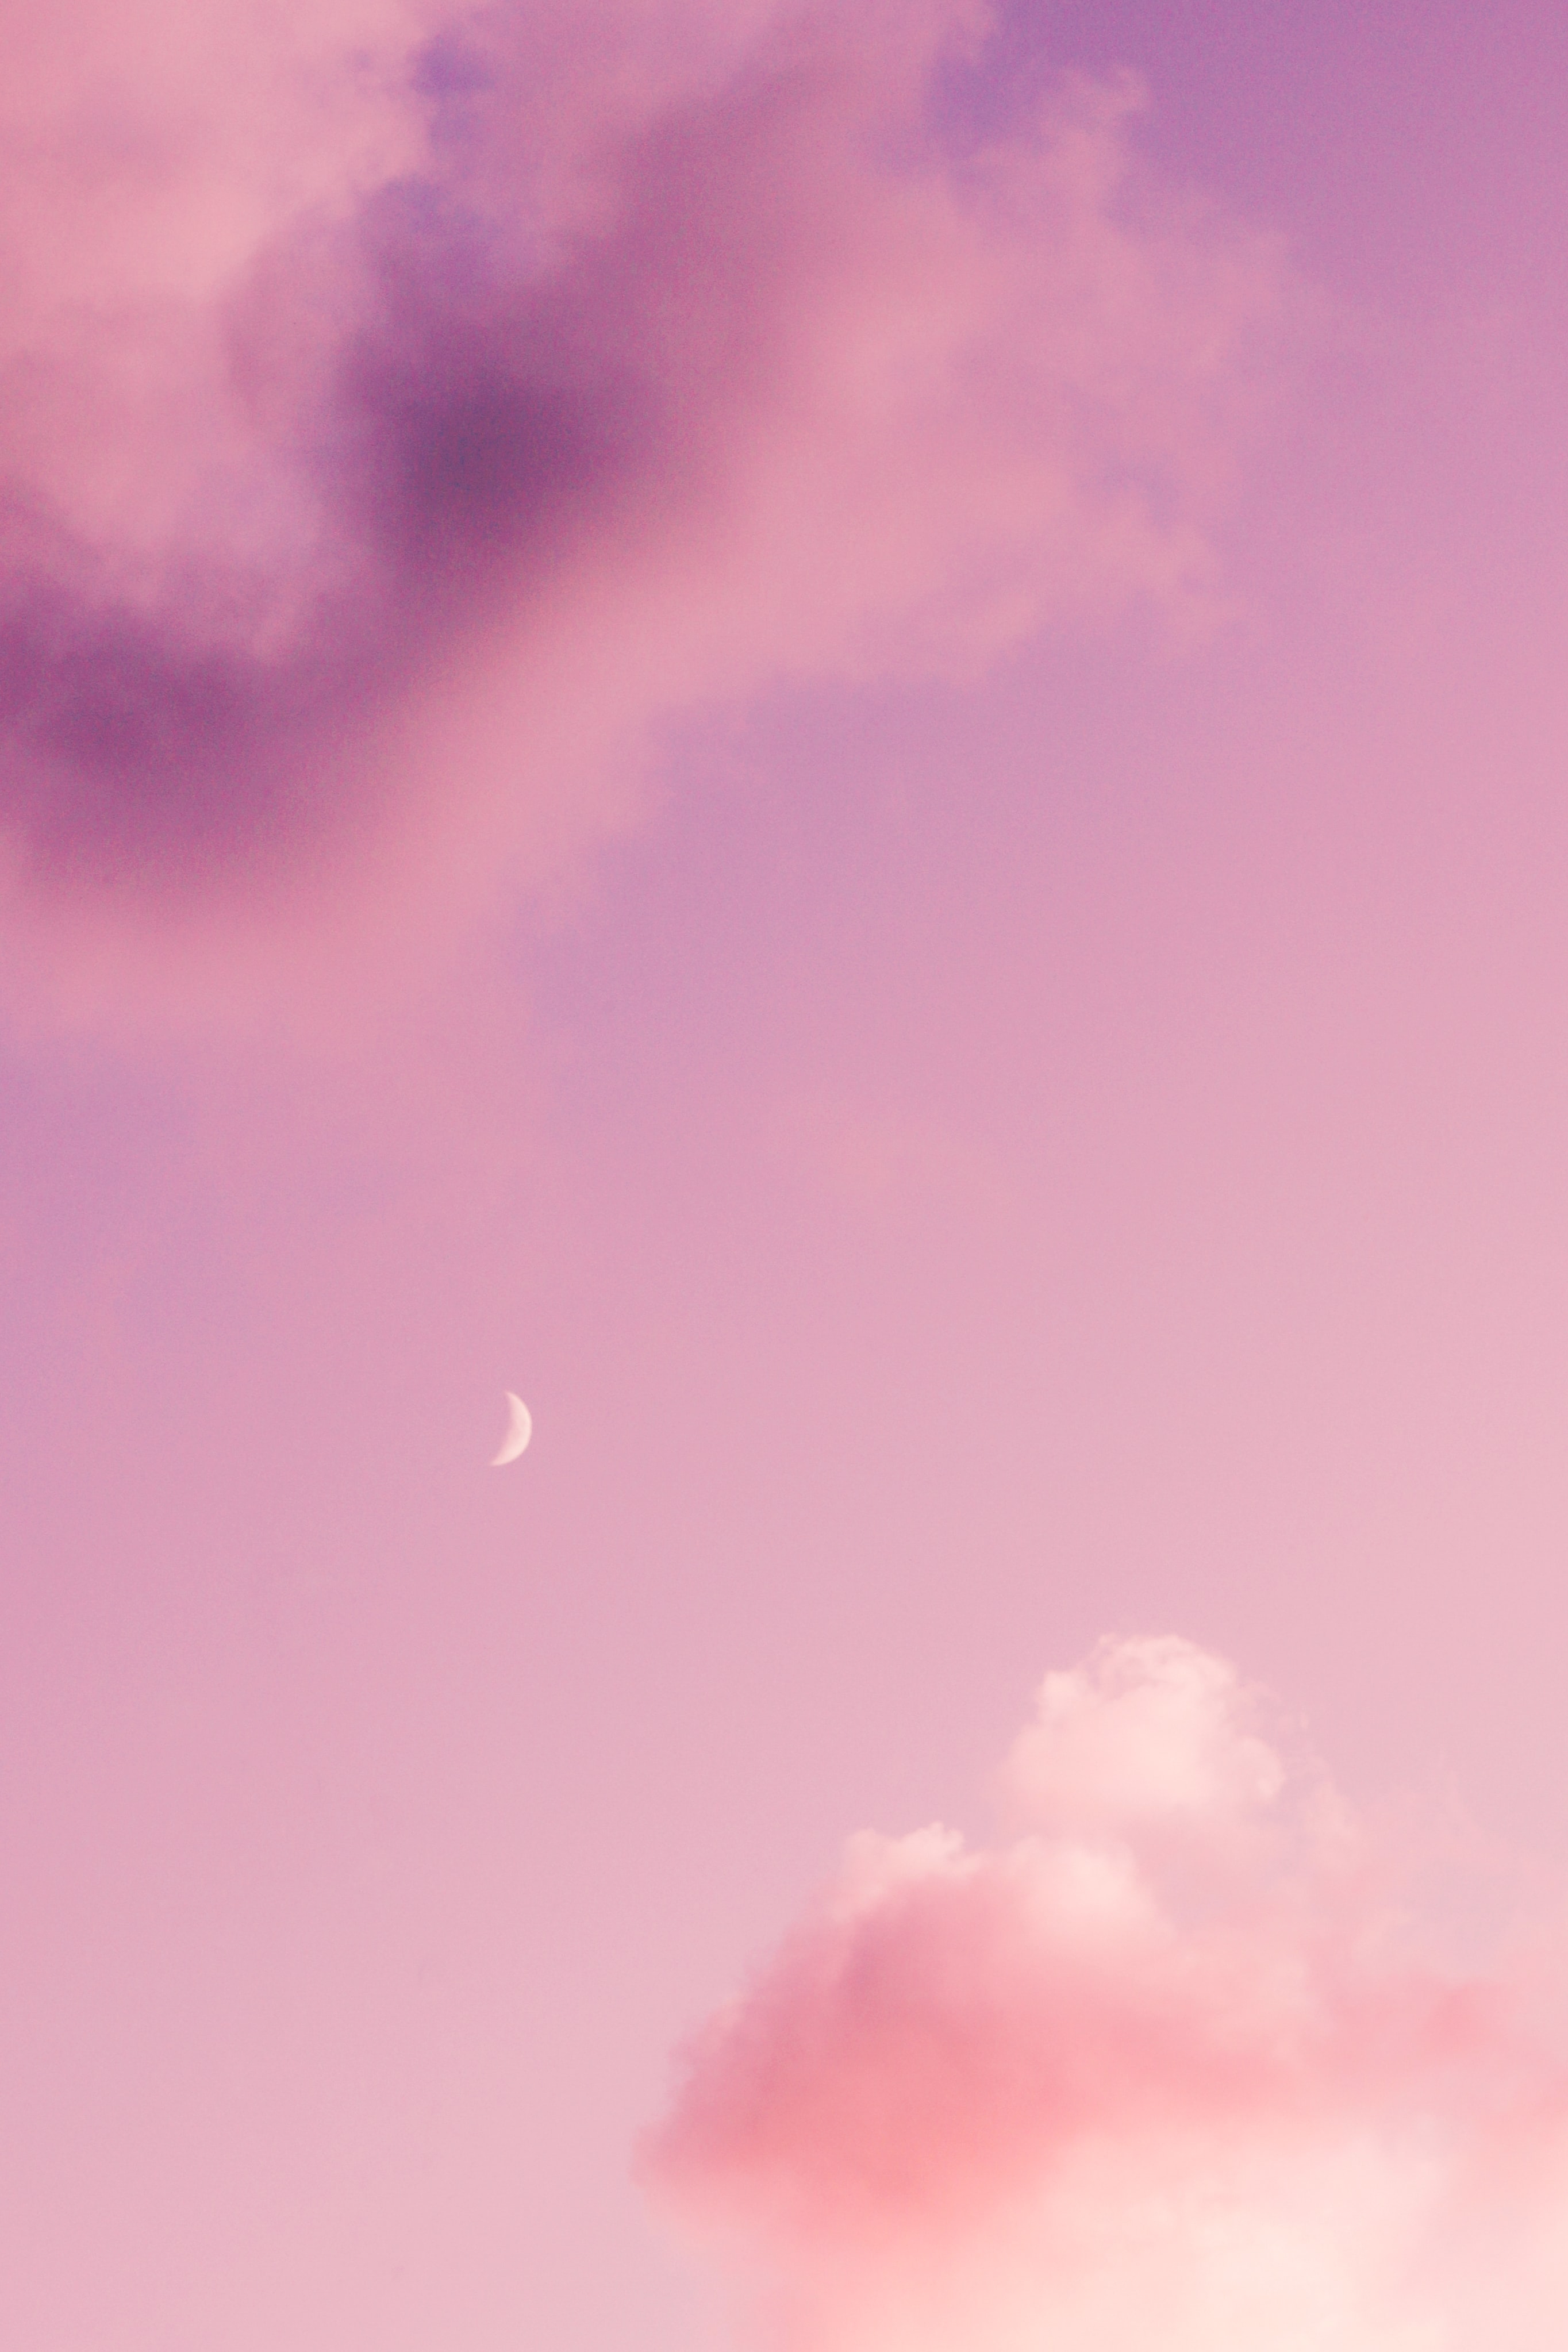 32k Wallpaper Pink nature, clouds, moon, sky